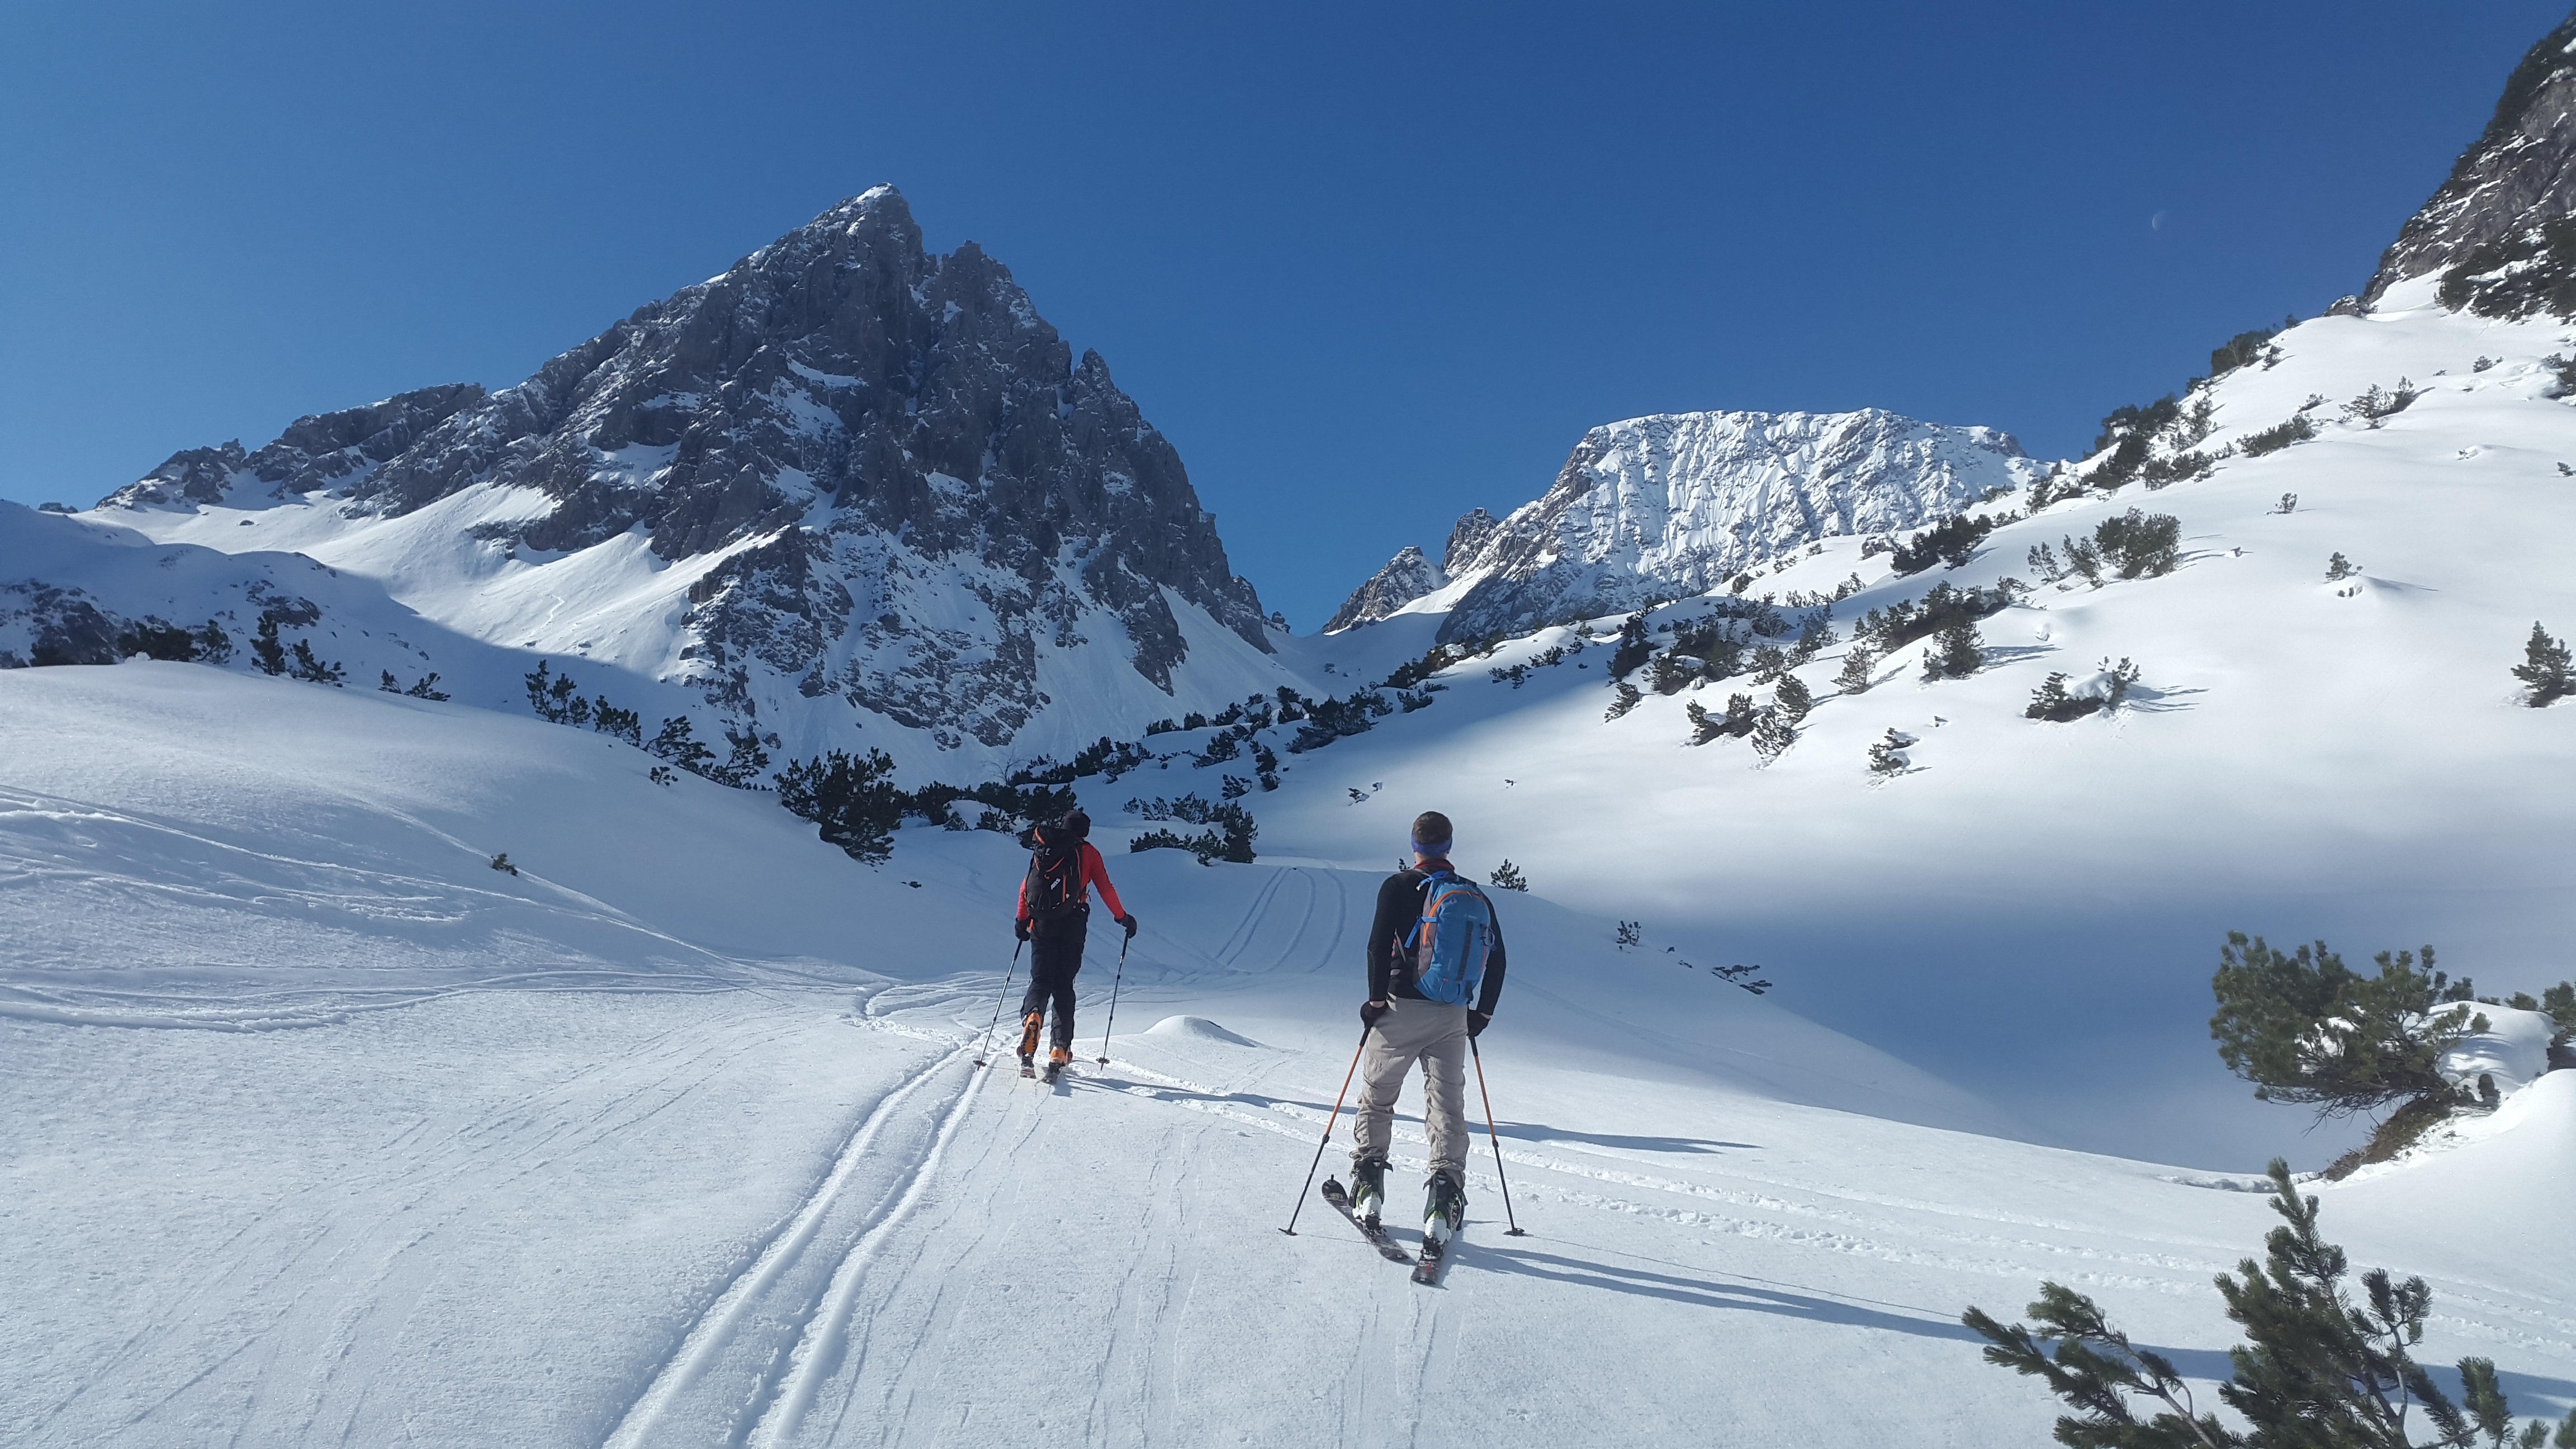 Descarga gratuita de fondo de pantalla para móvil de Invierno, Nieve, Montaña, Escalada, Esquí, Montañismo, Deporte.